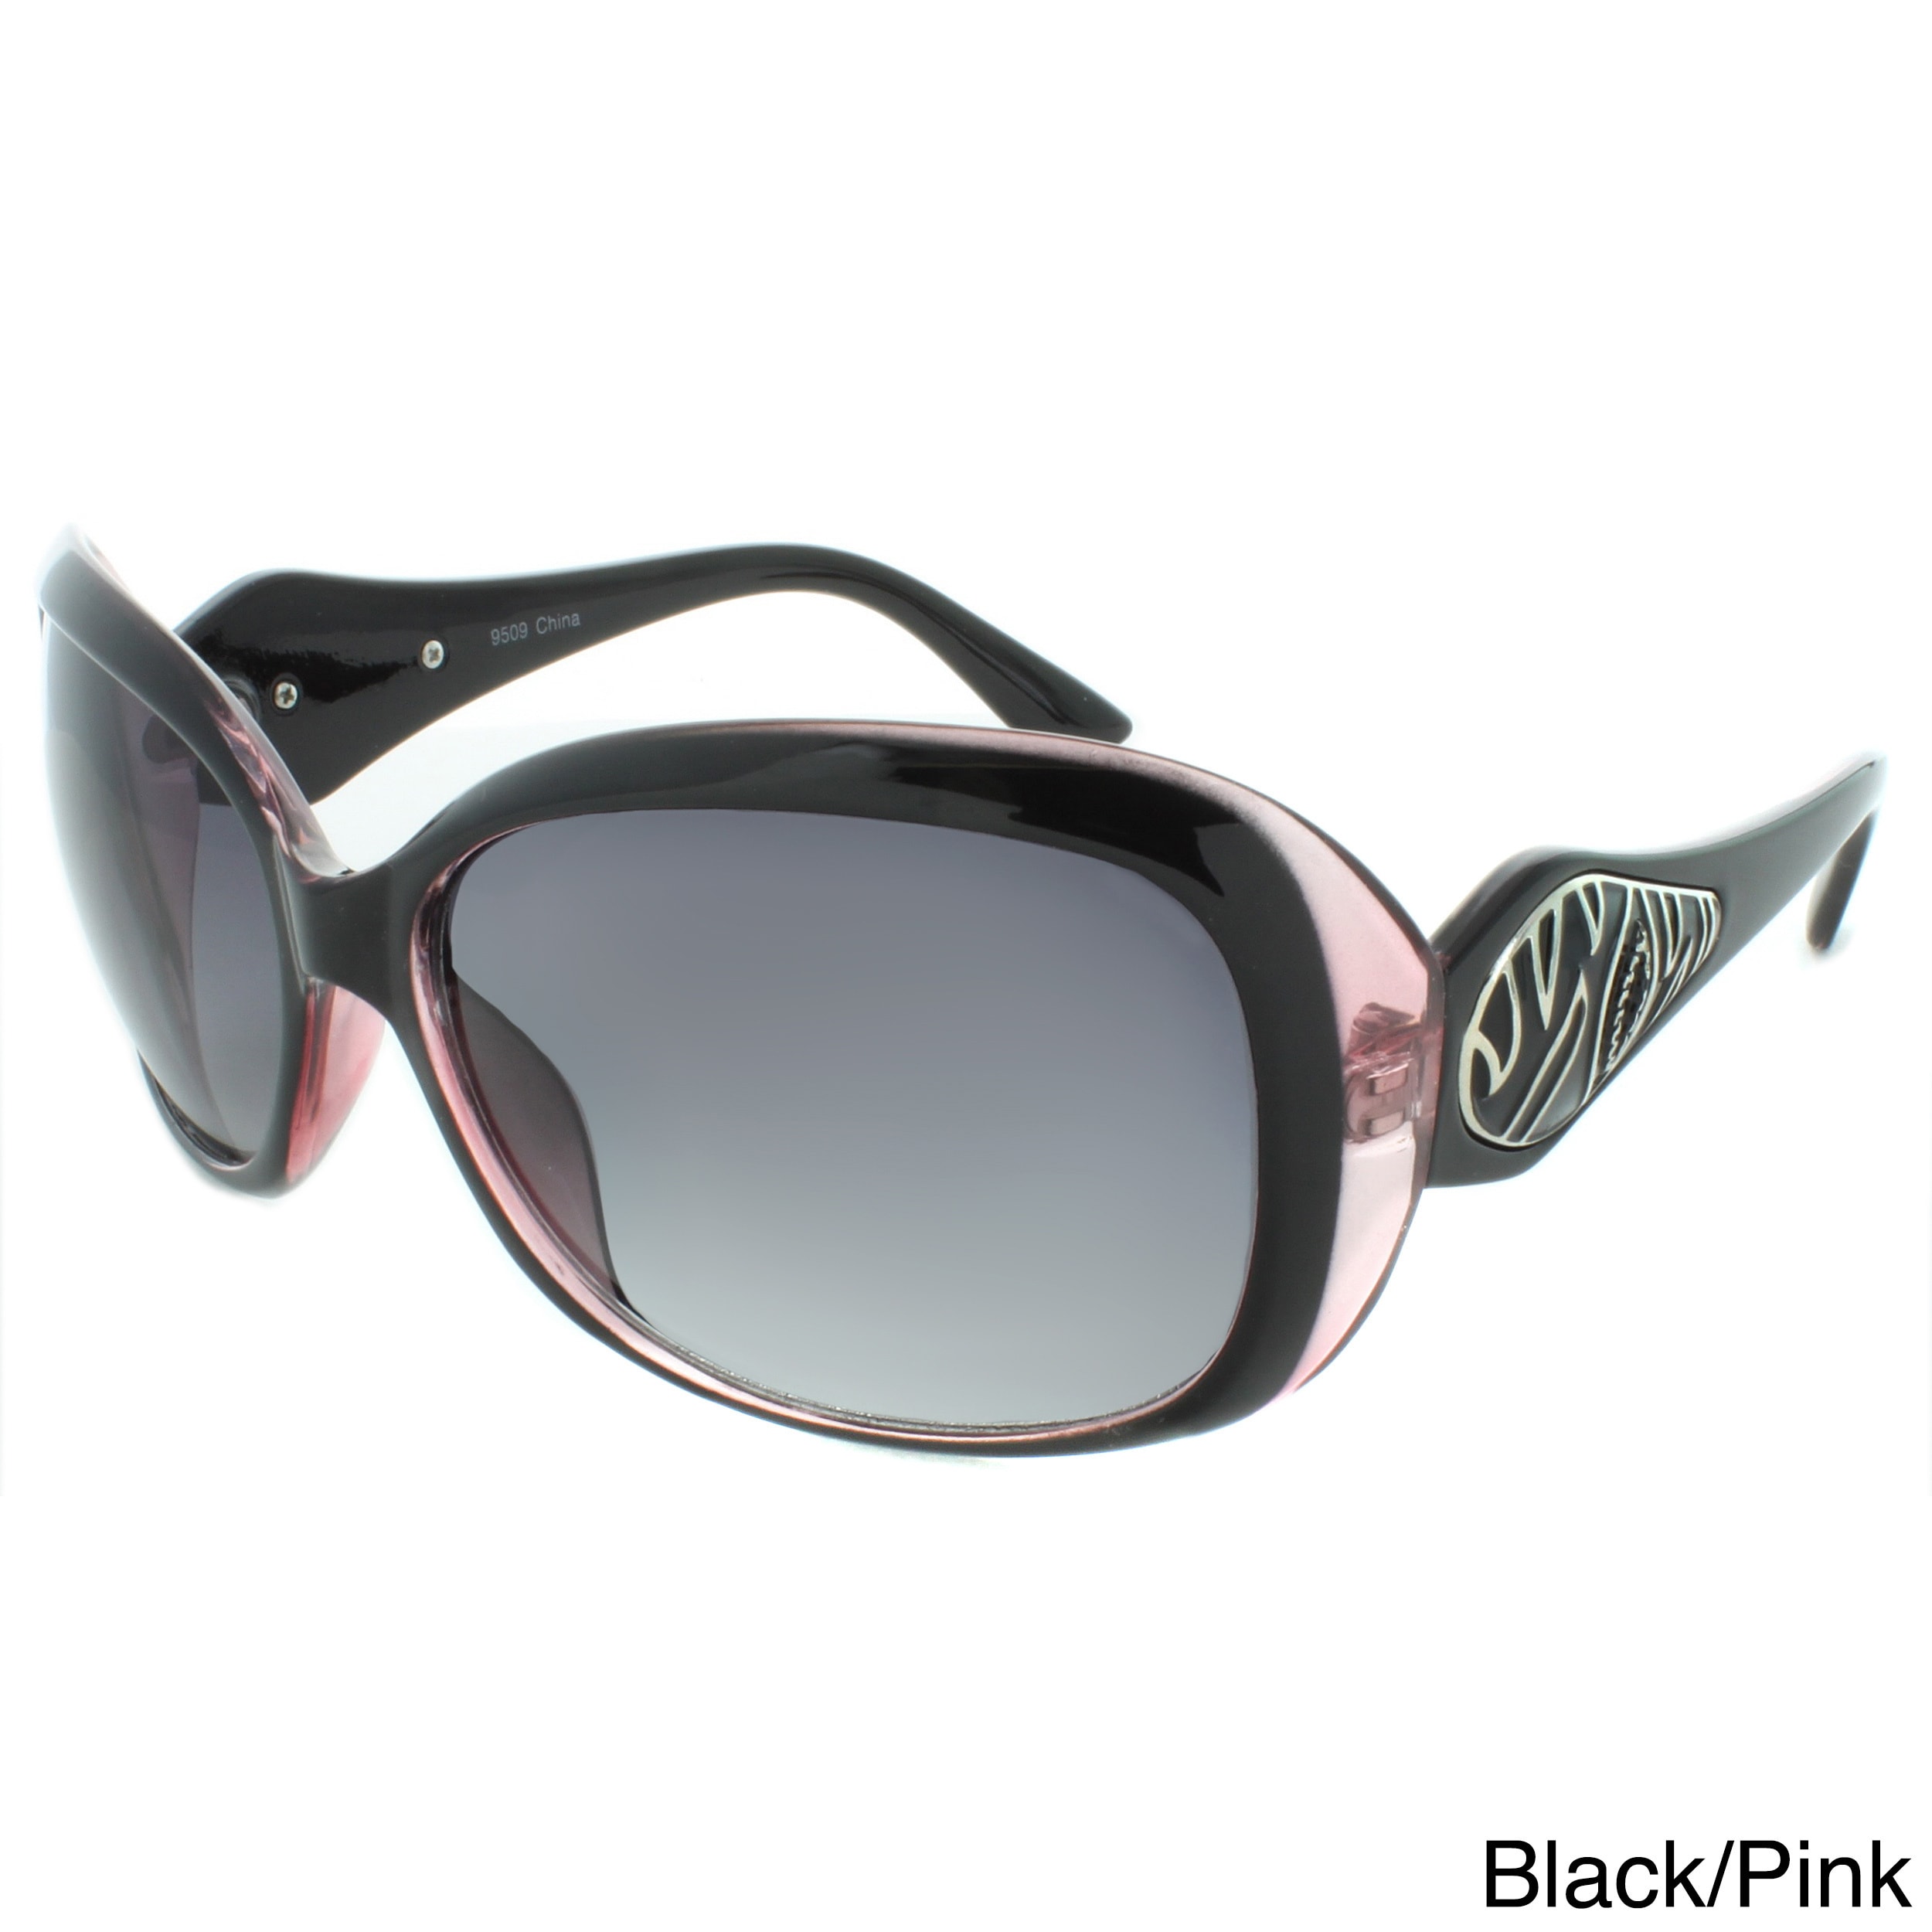 Epic Eyewear Womens Emblem temple 60mm Oval Sunglasses